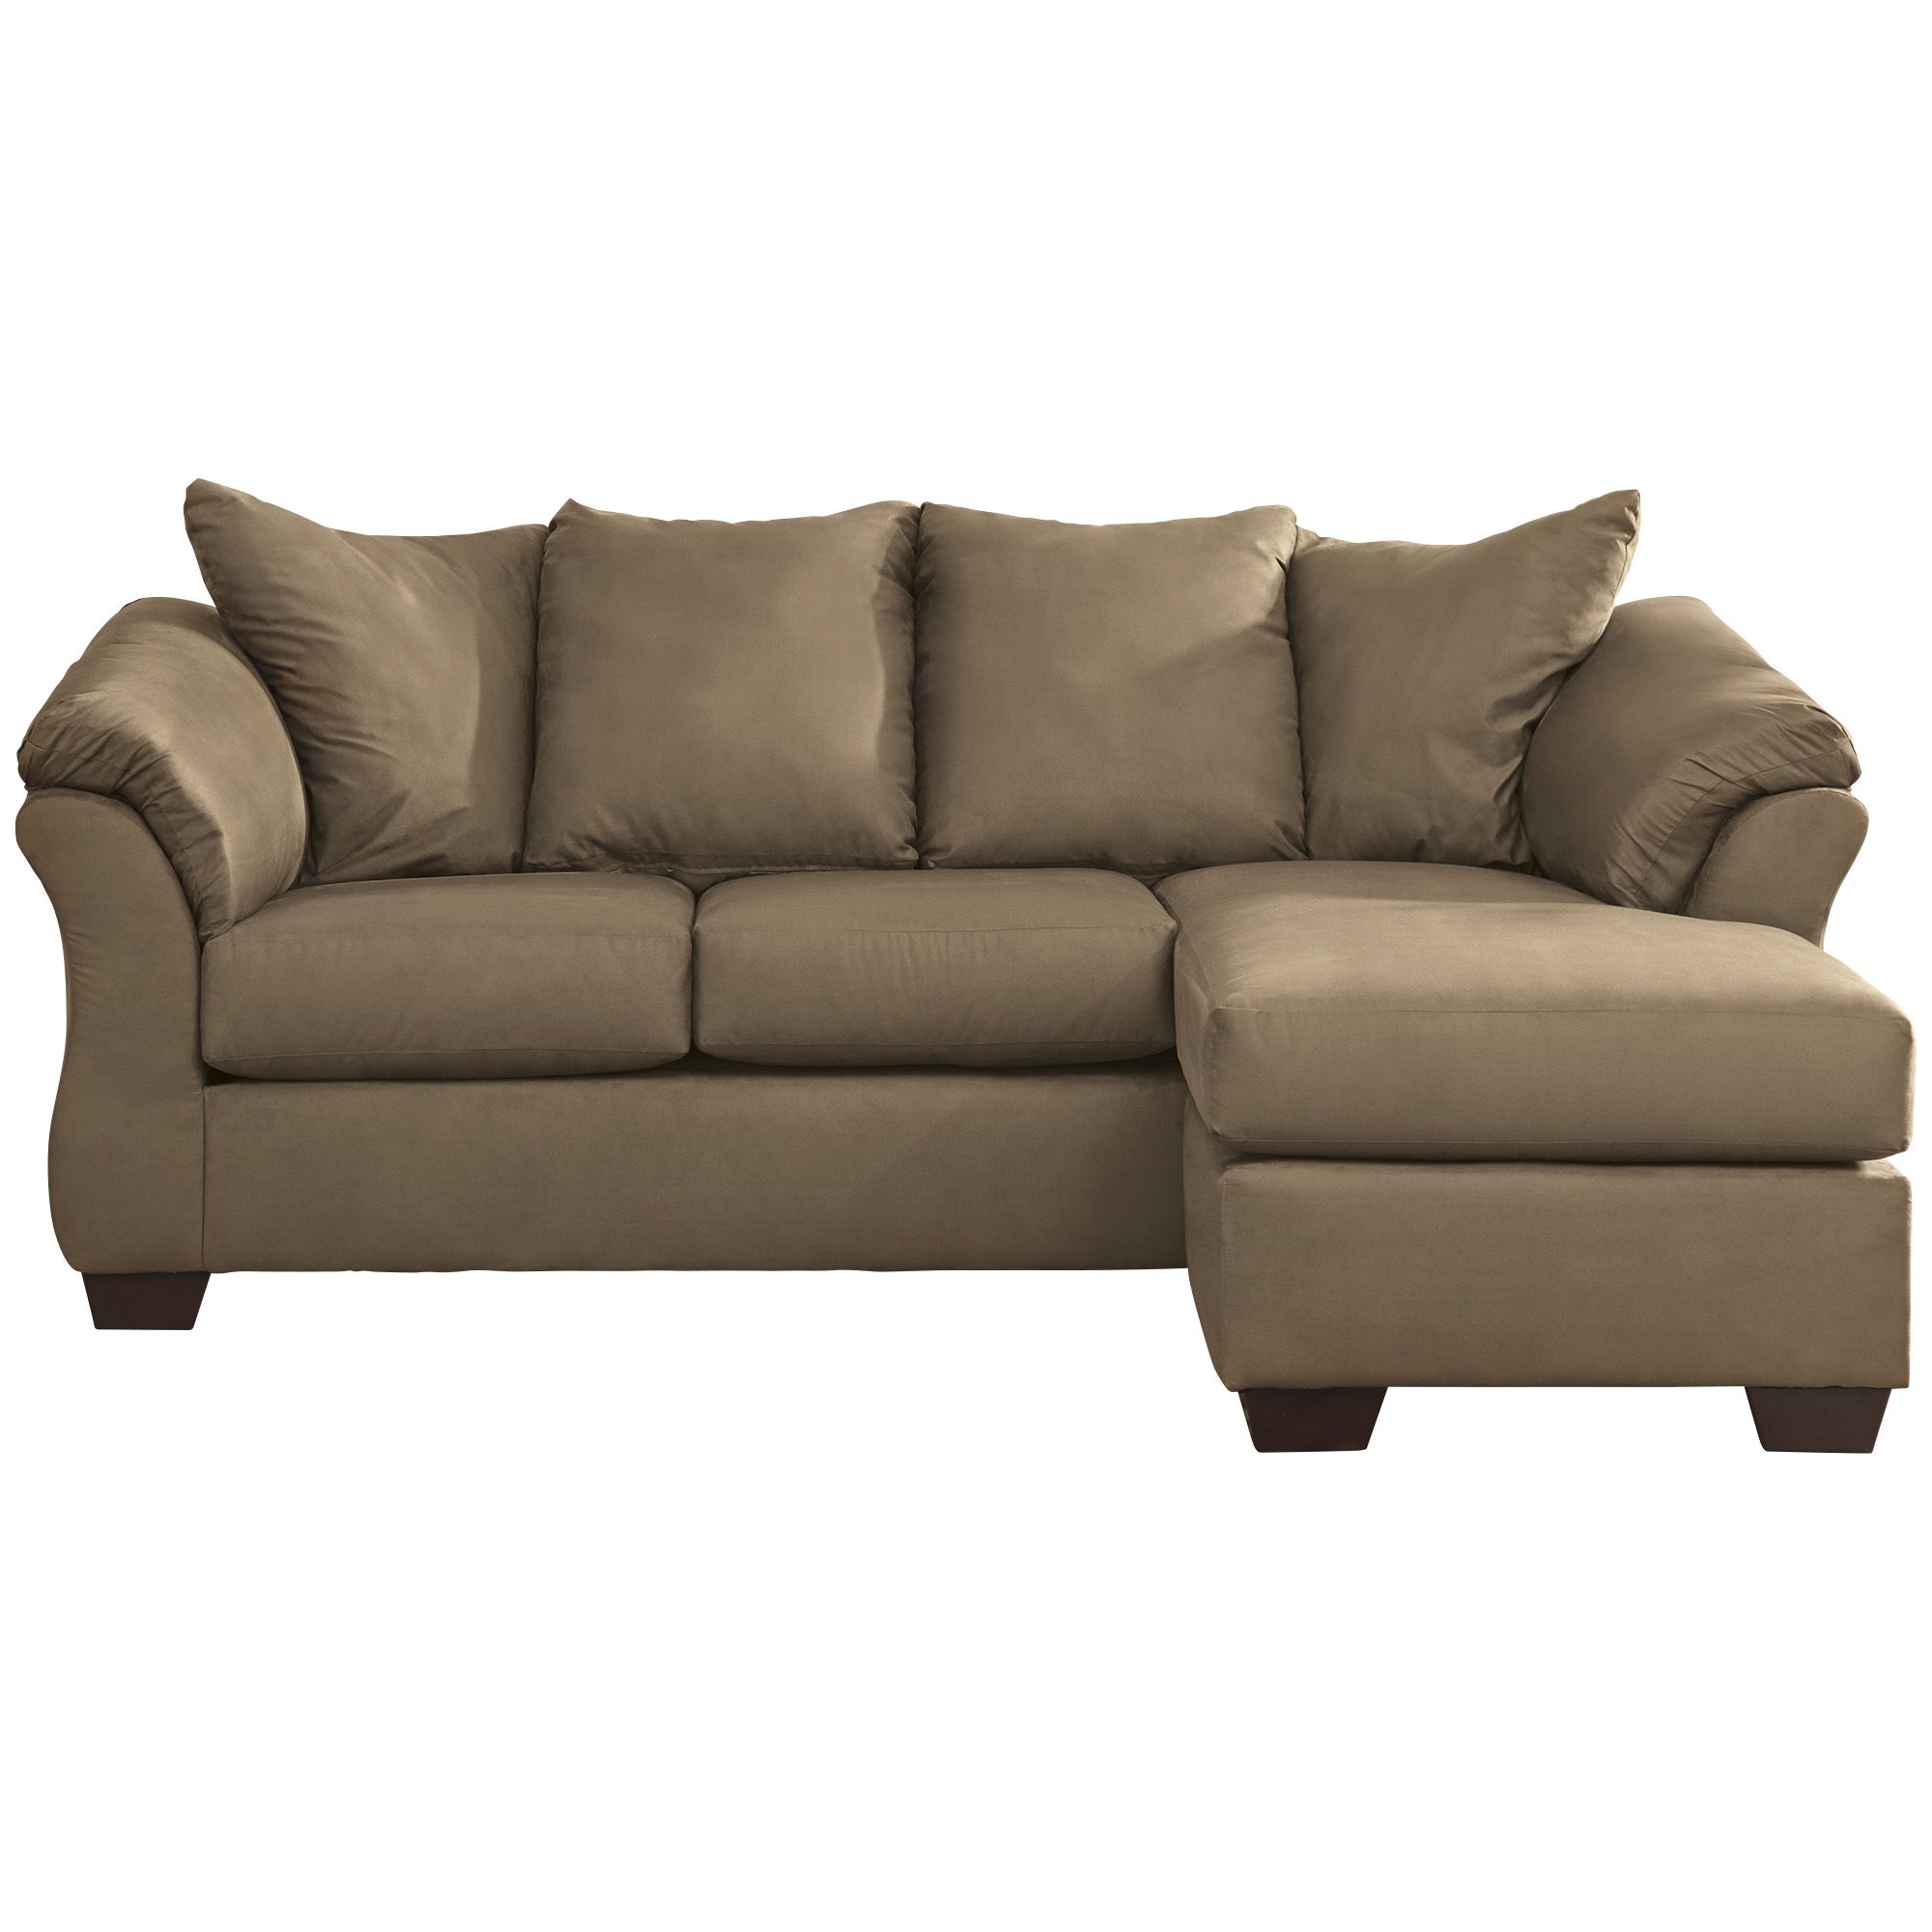 Fingerhut Ashley Furniture Darcy Sofa With Chaise Mocha